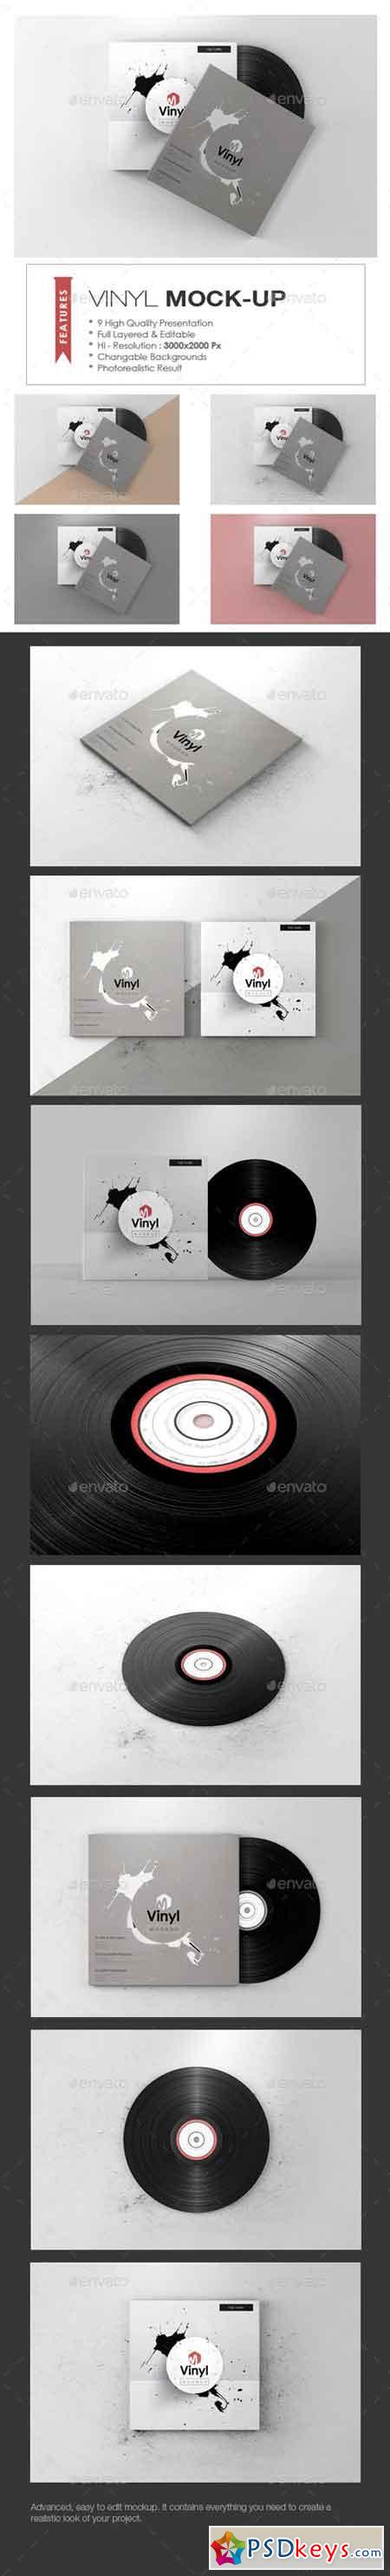 Download Vinyl Mock-up 19758502 » Free Download Photoshop Vector Stock image Via Torrent Zippyshare From ...